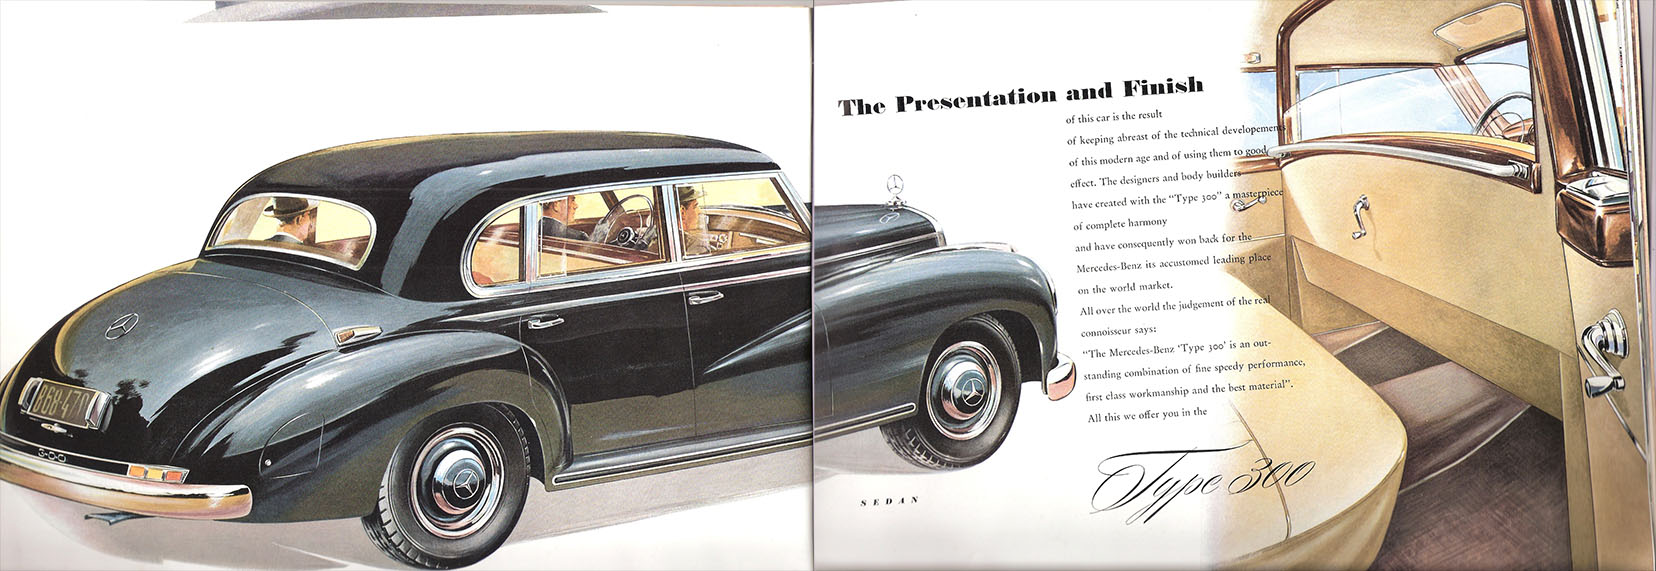 1952 Mercedes 300 W186 Sales Advertising Original 50's Classic Car Ad